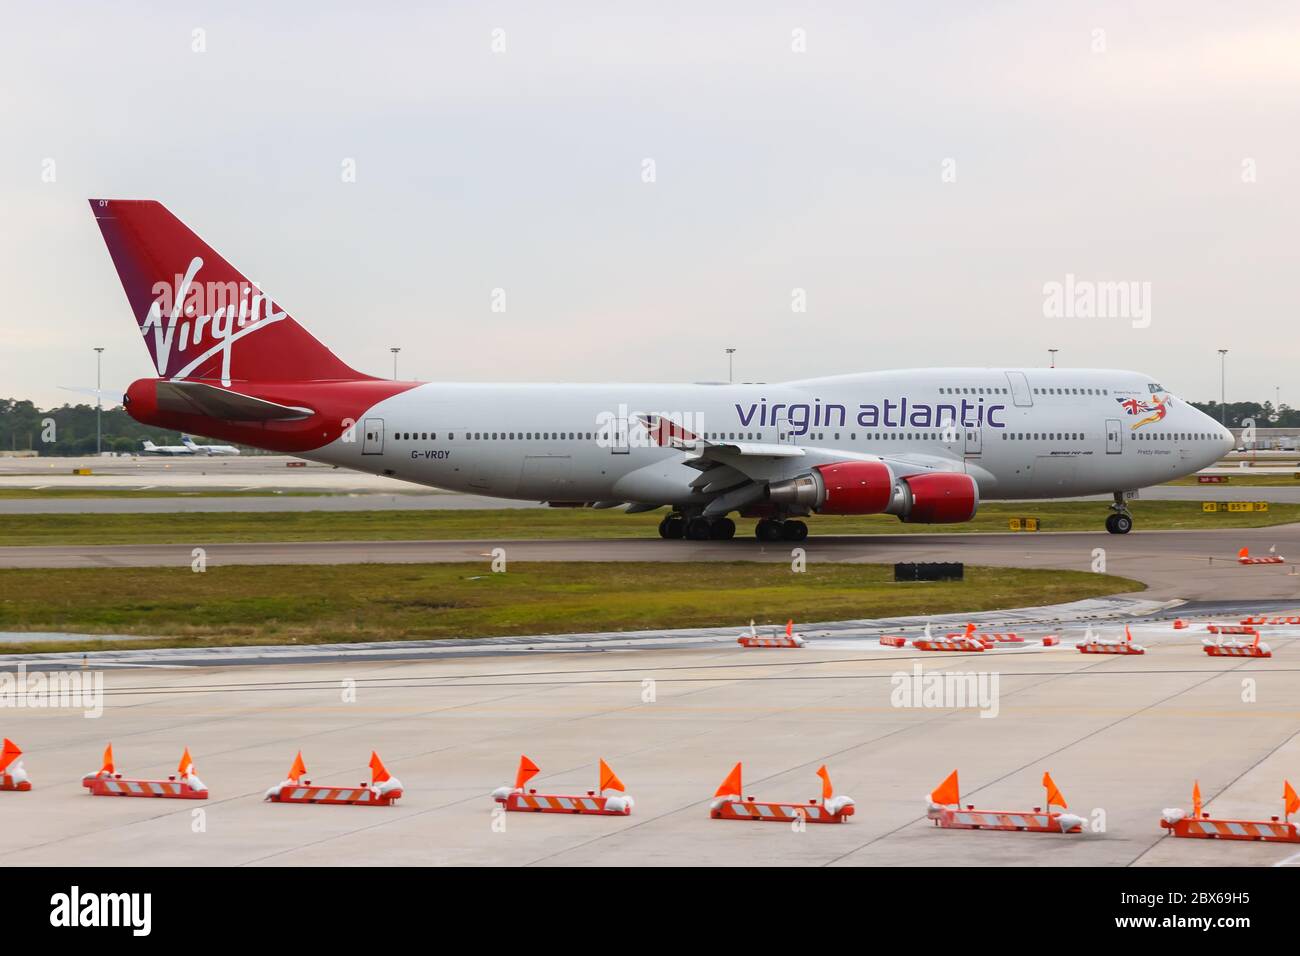 Orlando, Florida - April 7, 2019: Virgin Atlantic Boeing 747-400 airplane at Orlando International airport (MCO) in Florida. Boeing is an American air Stock Photo